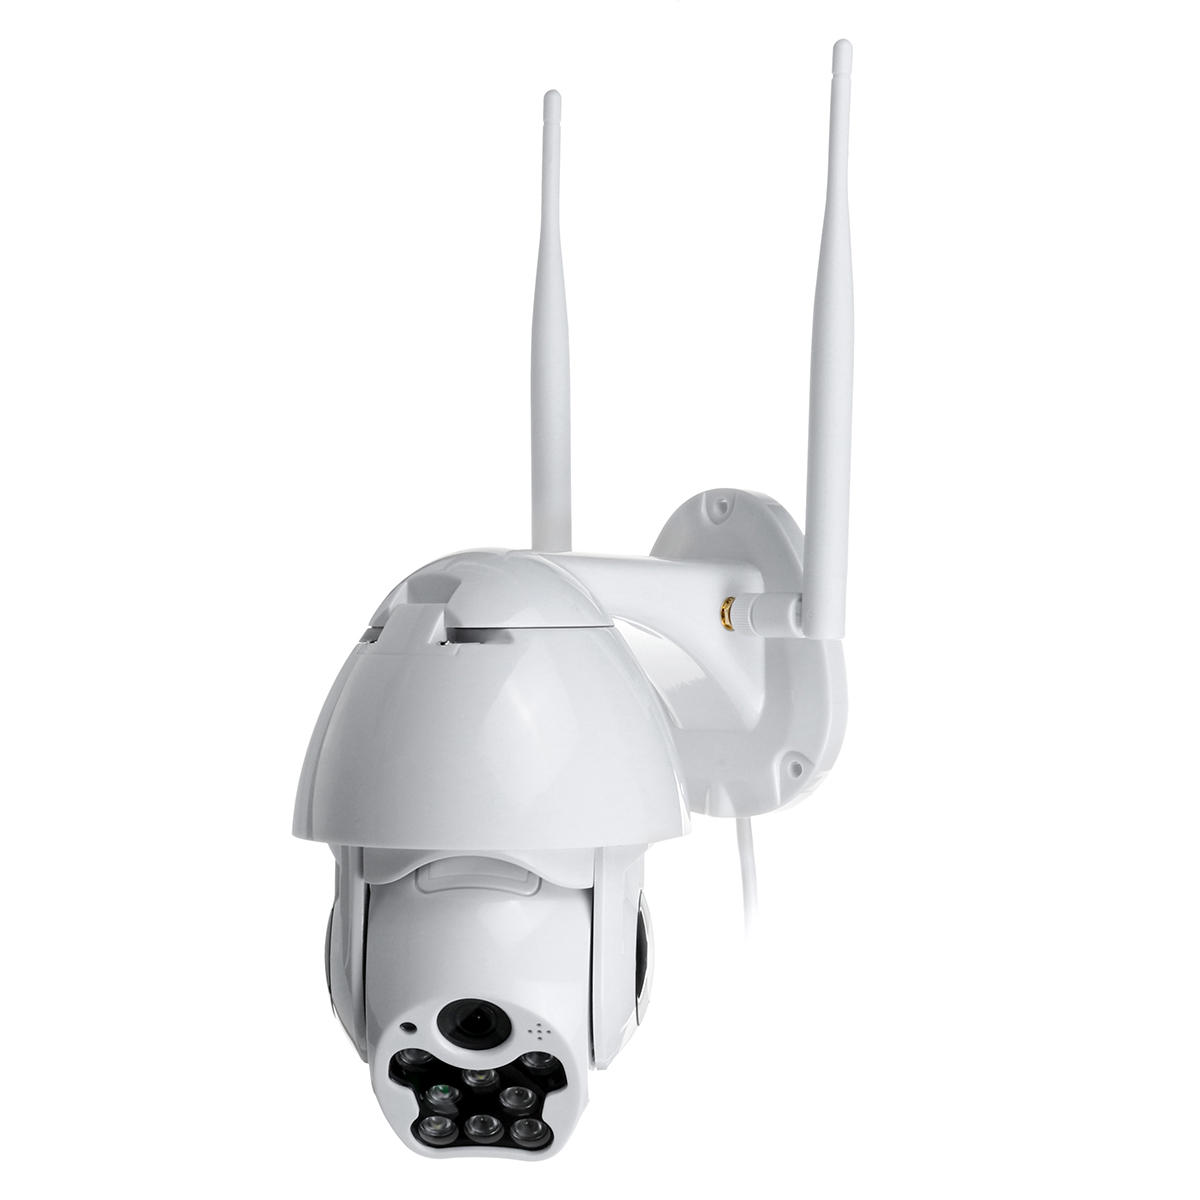 

Auto Tracking Outdoor PTZ IP Camera 1080P WiFi Speed Dome Surveillance Camera